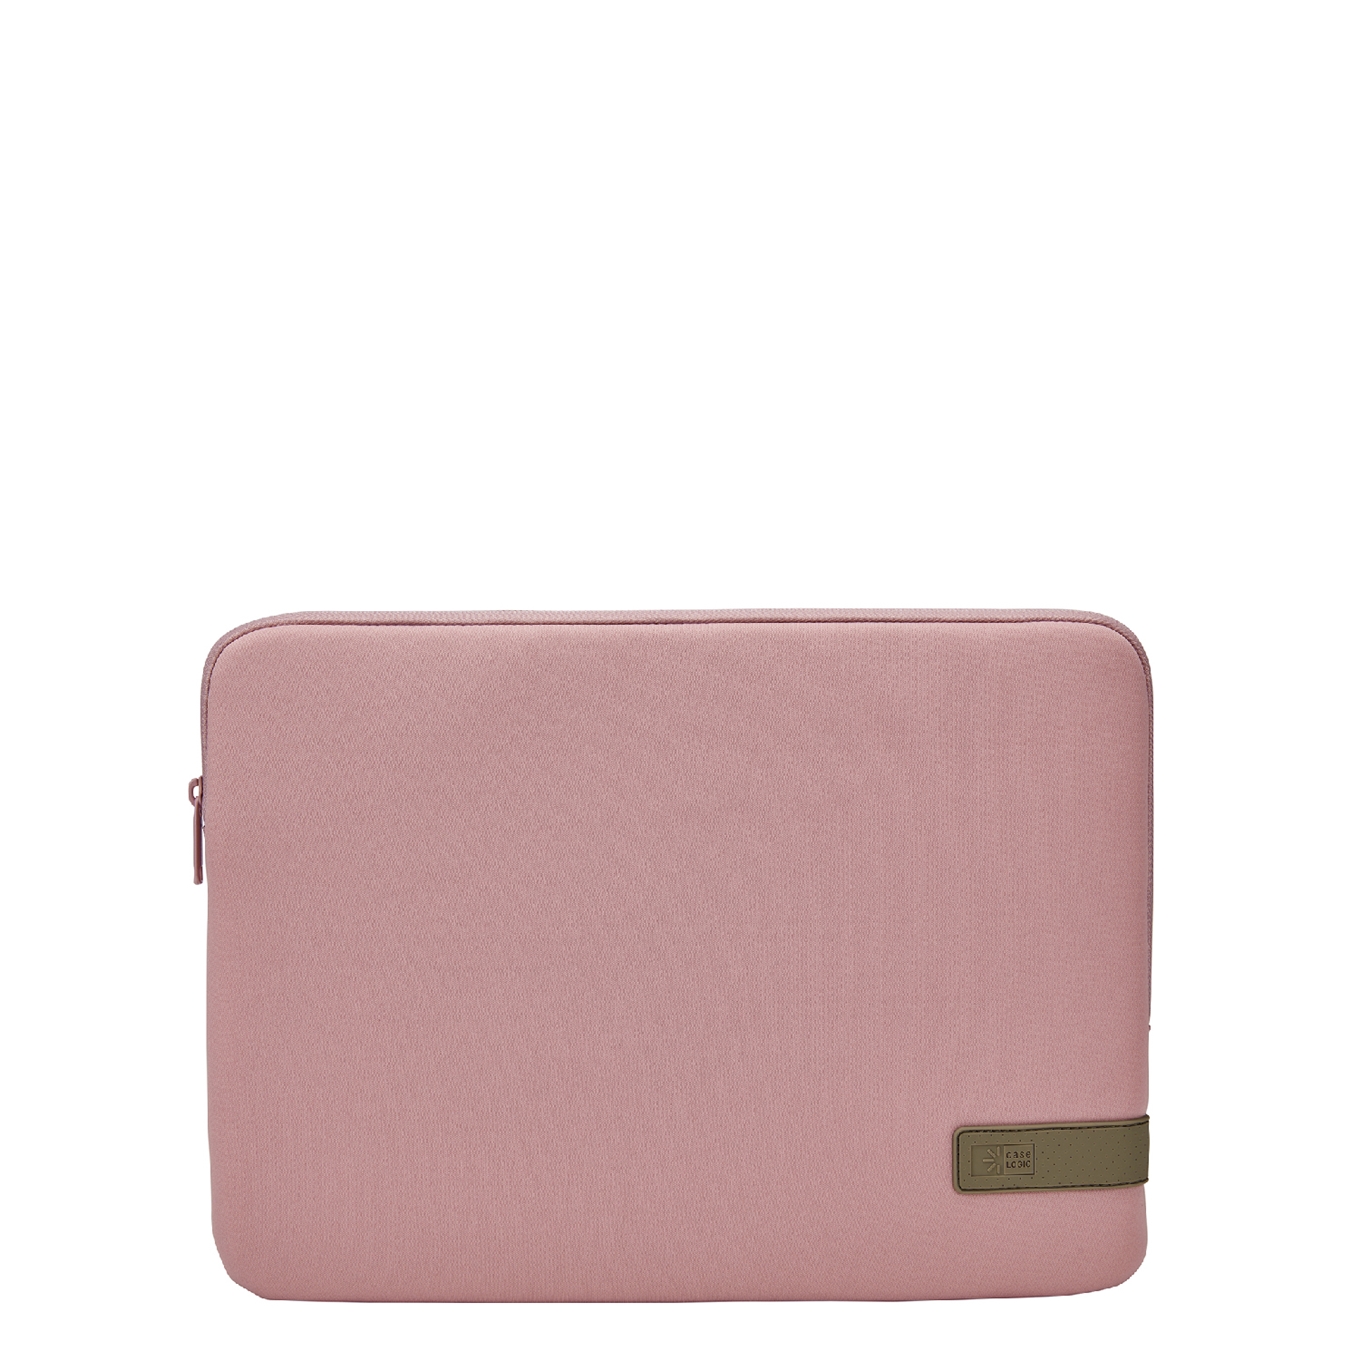 Case Laptop Sleeve 14 zephyr pink/mermaid Travelbags.nl